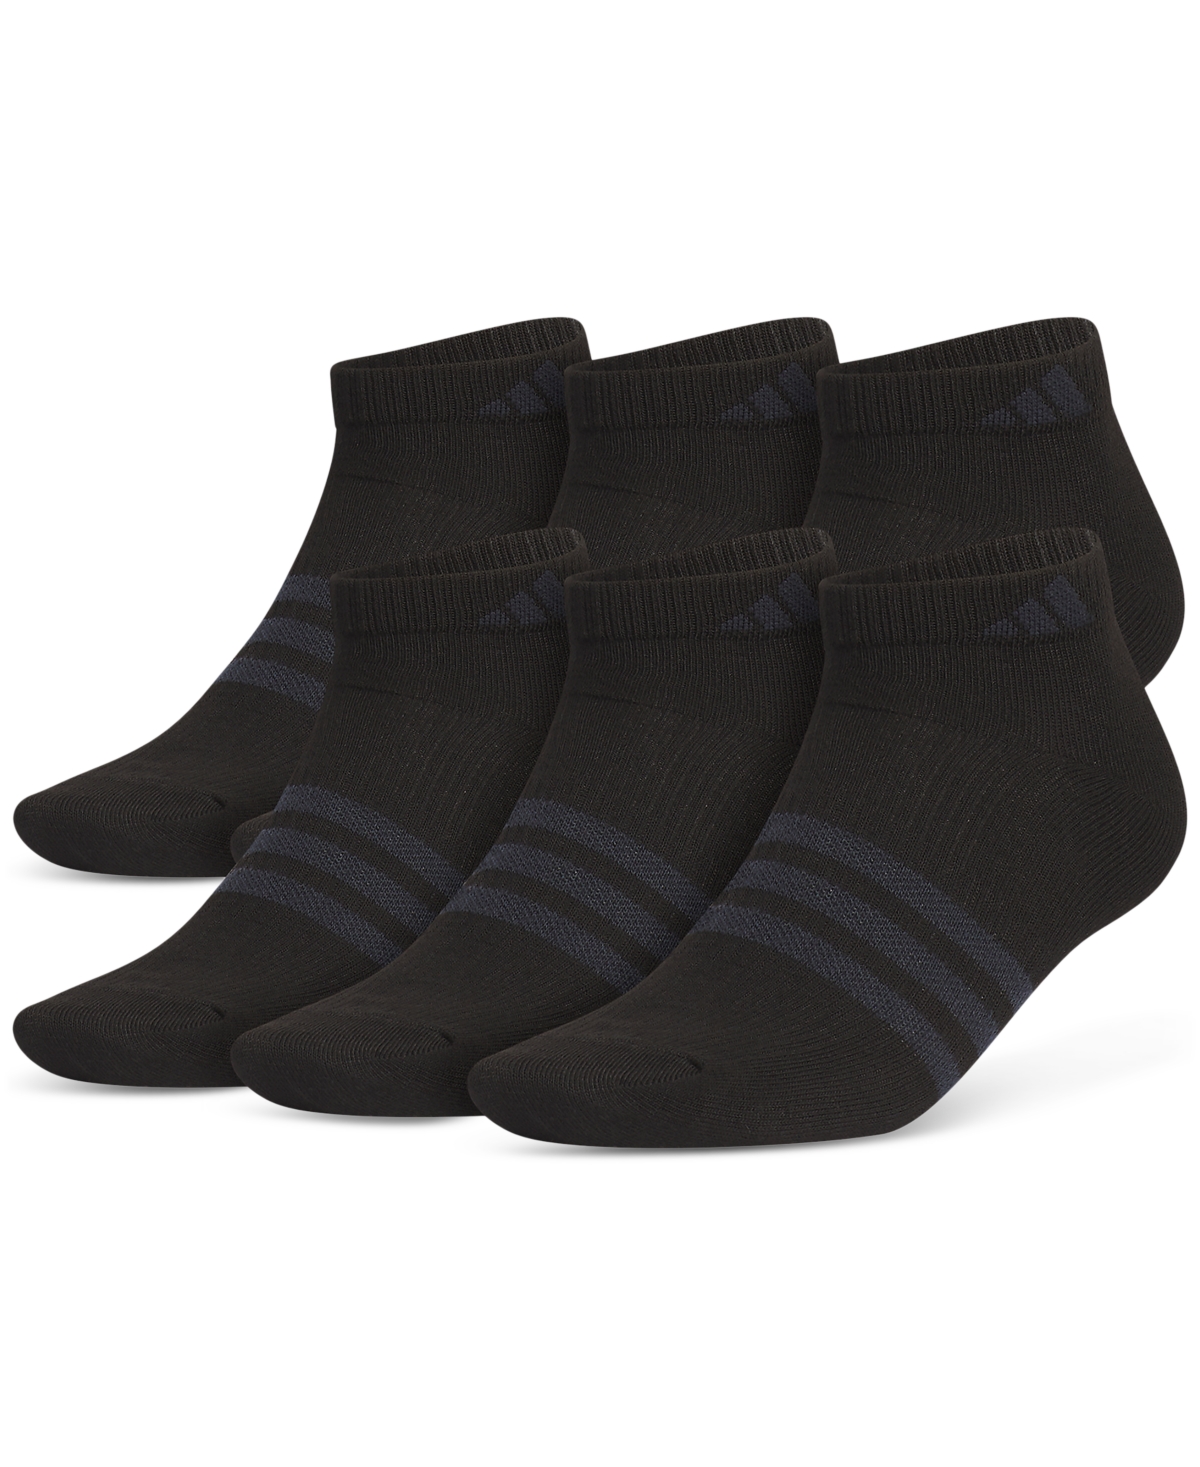 Men's Superlite 3.0 Low Cut Socks - 6 pk. - Black